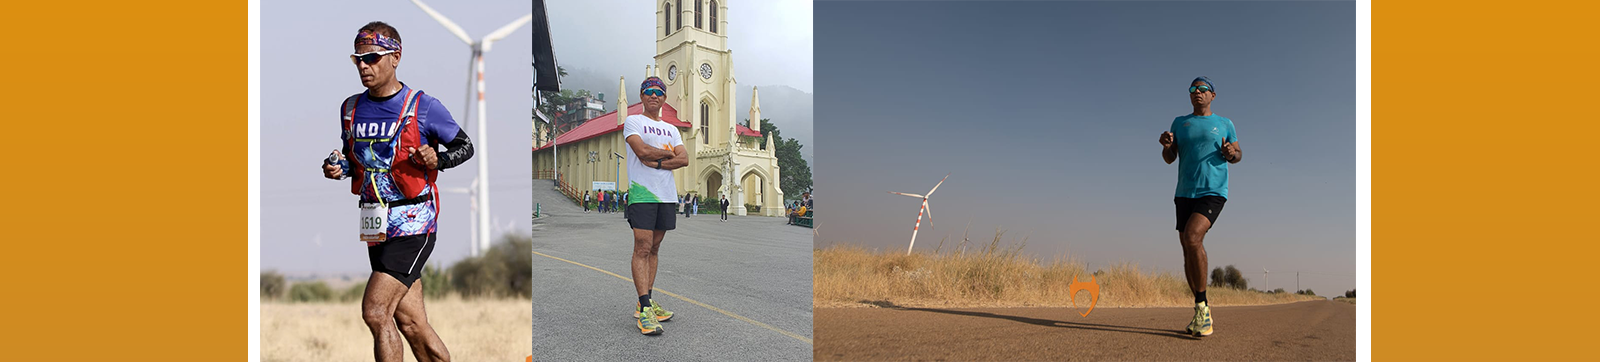 Rakesh Kashyap, Ultramarathoner Who Ran 246 KM in 36 Hours at Age 51